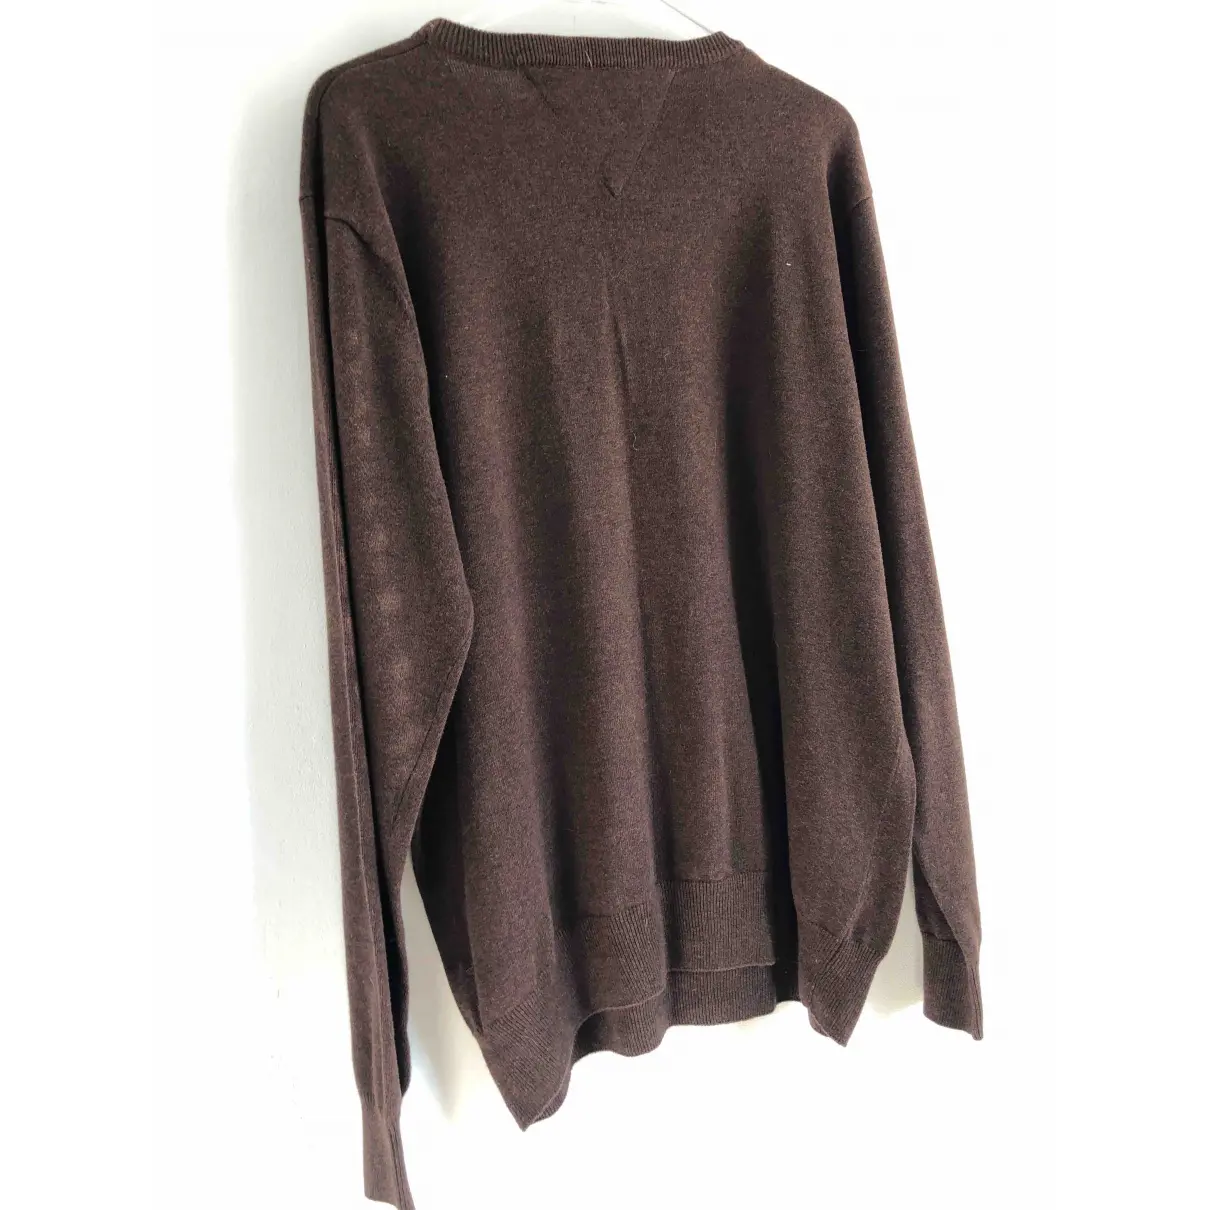 Buy Tommy Hilfiger Brown Cotton Knitwear & Sweatshirt online